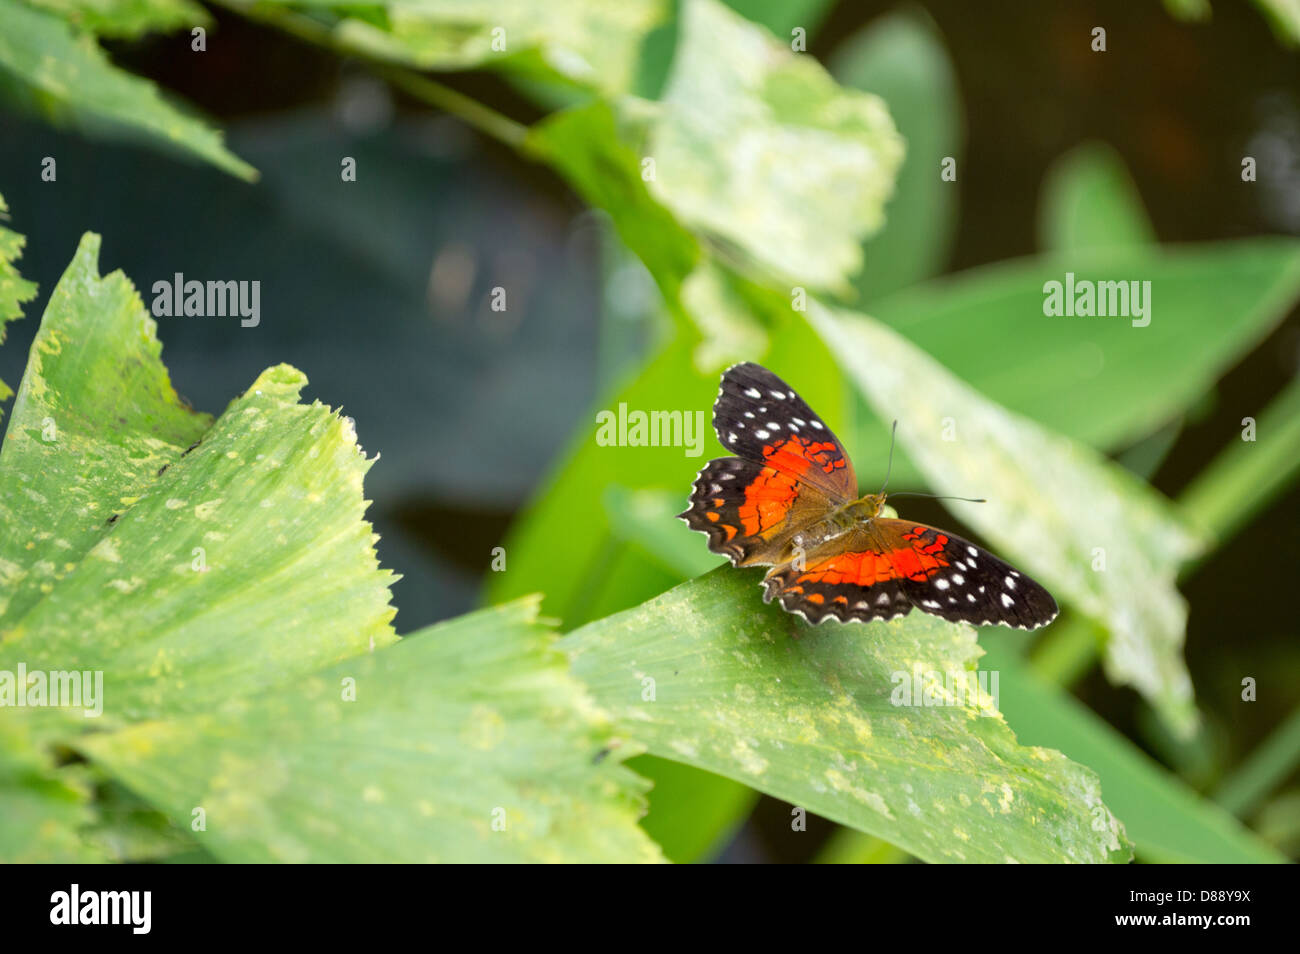 Scarlet pavone o Anartia amathea butterfly in olandese del giardino delle farfalle Foto Stock